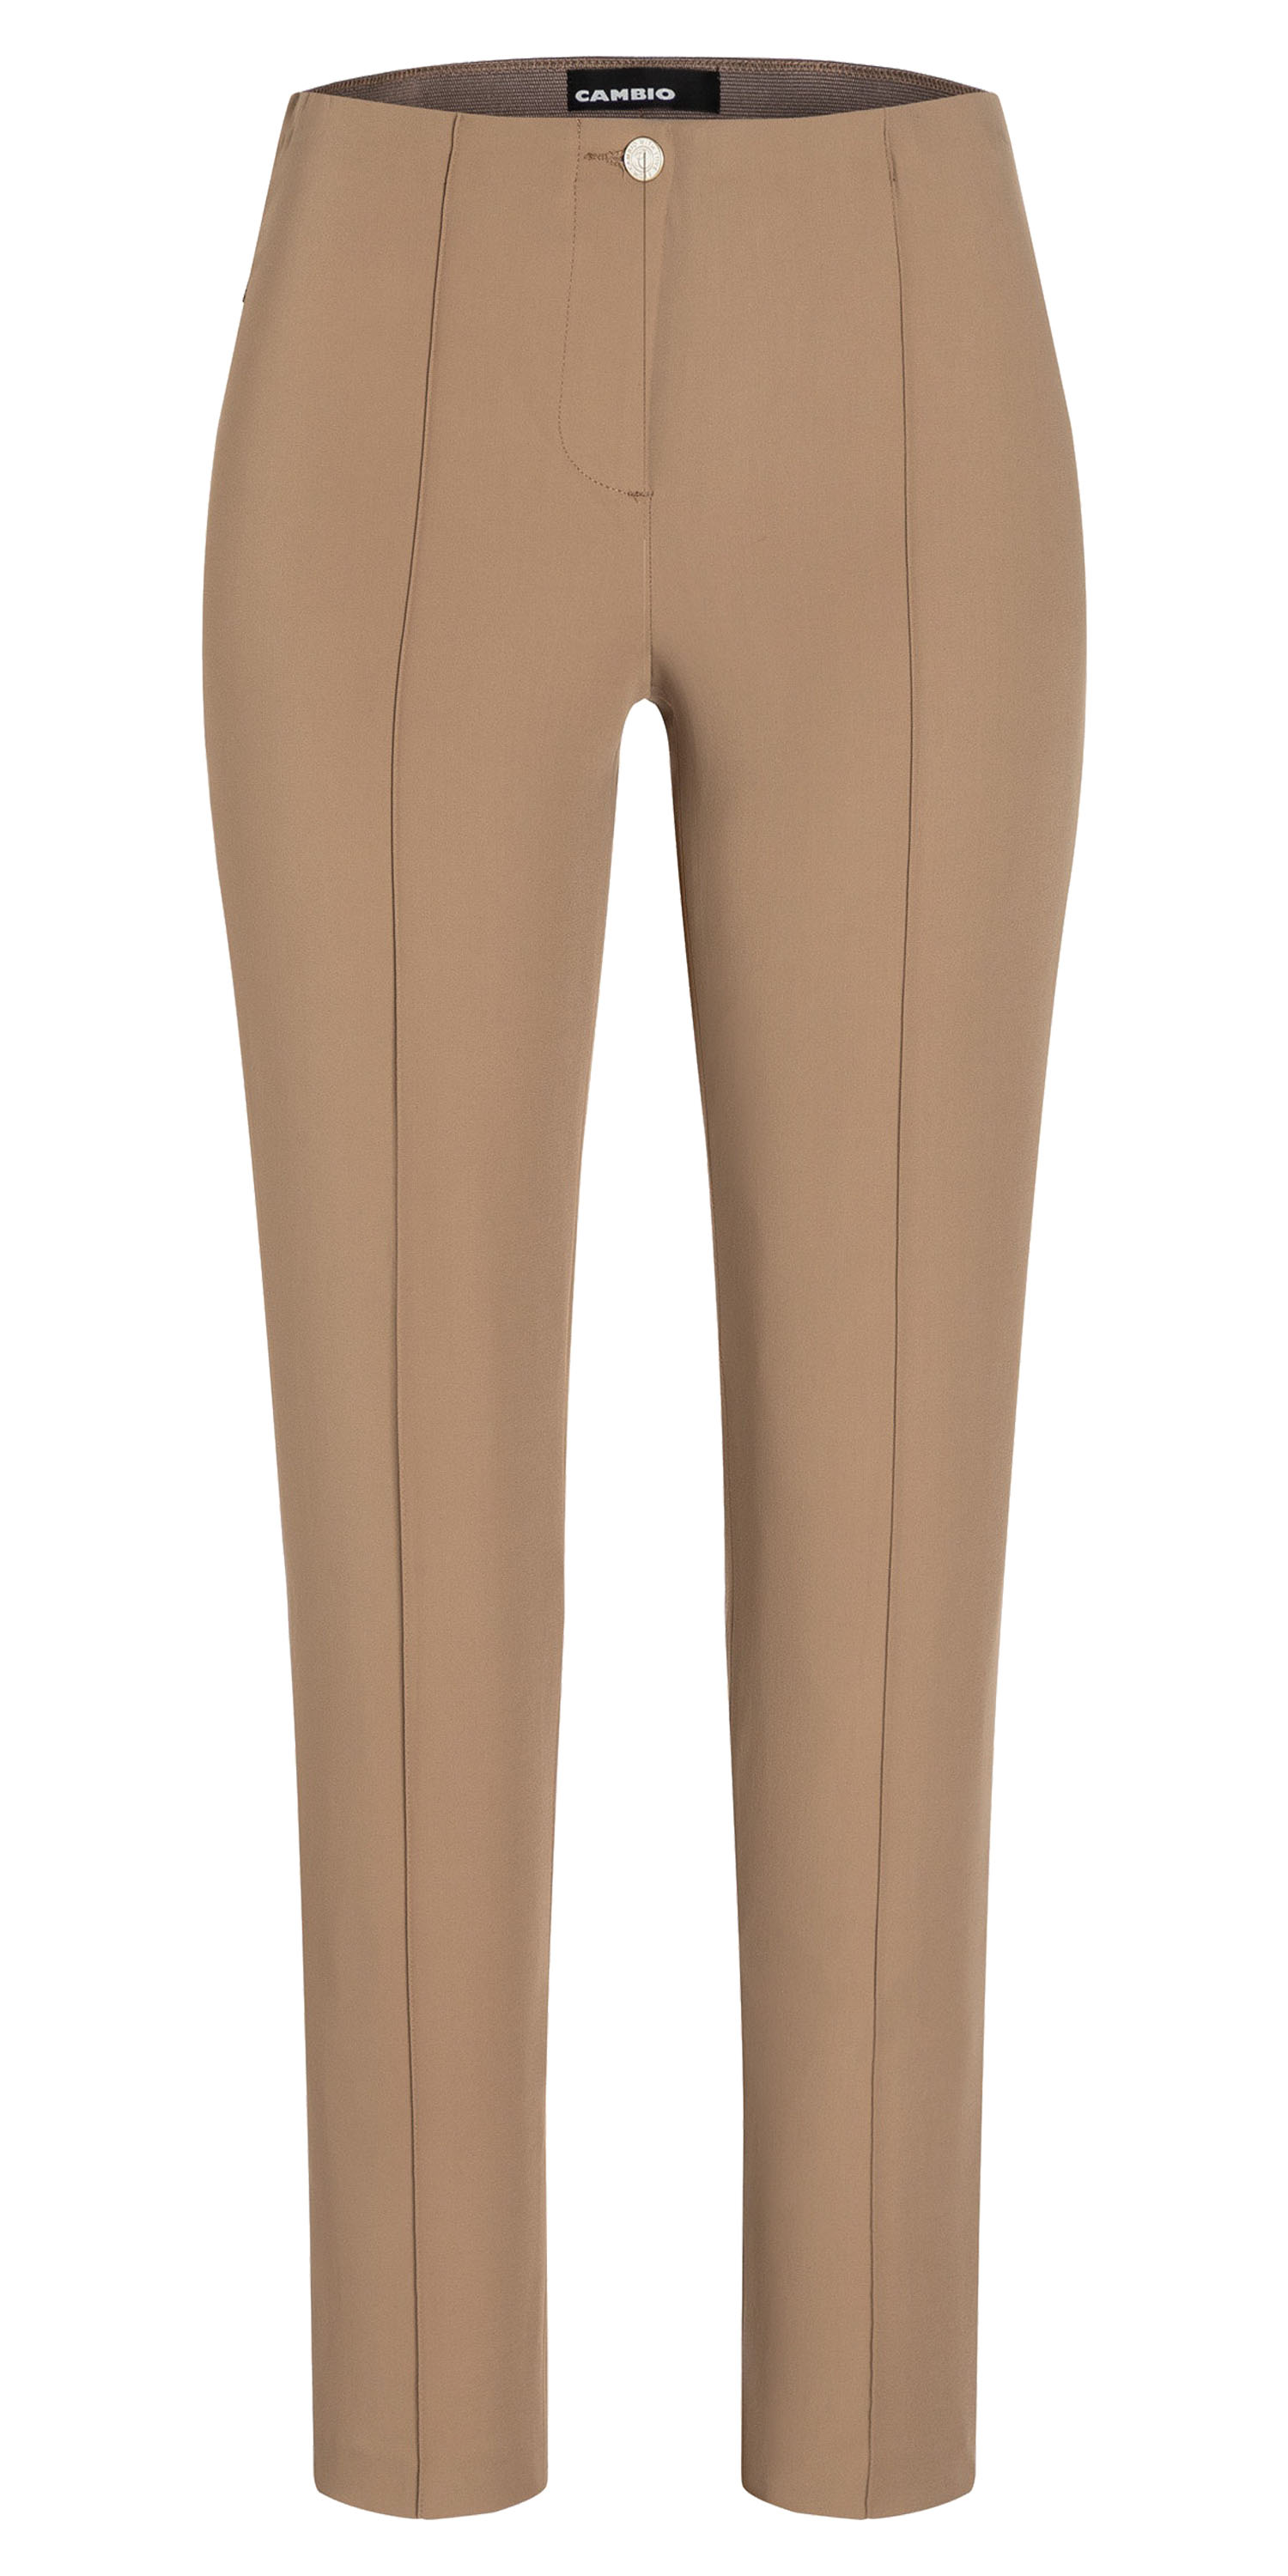 CASTELLANI ITALY Designer Ladies Camel Trousers Size W26 L34 | eBay